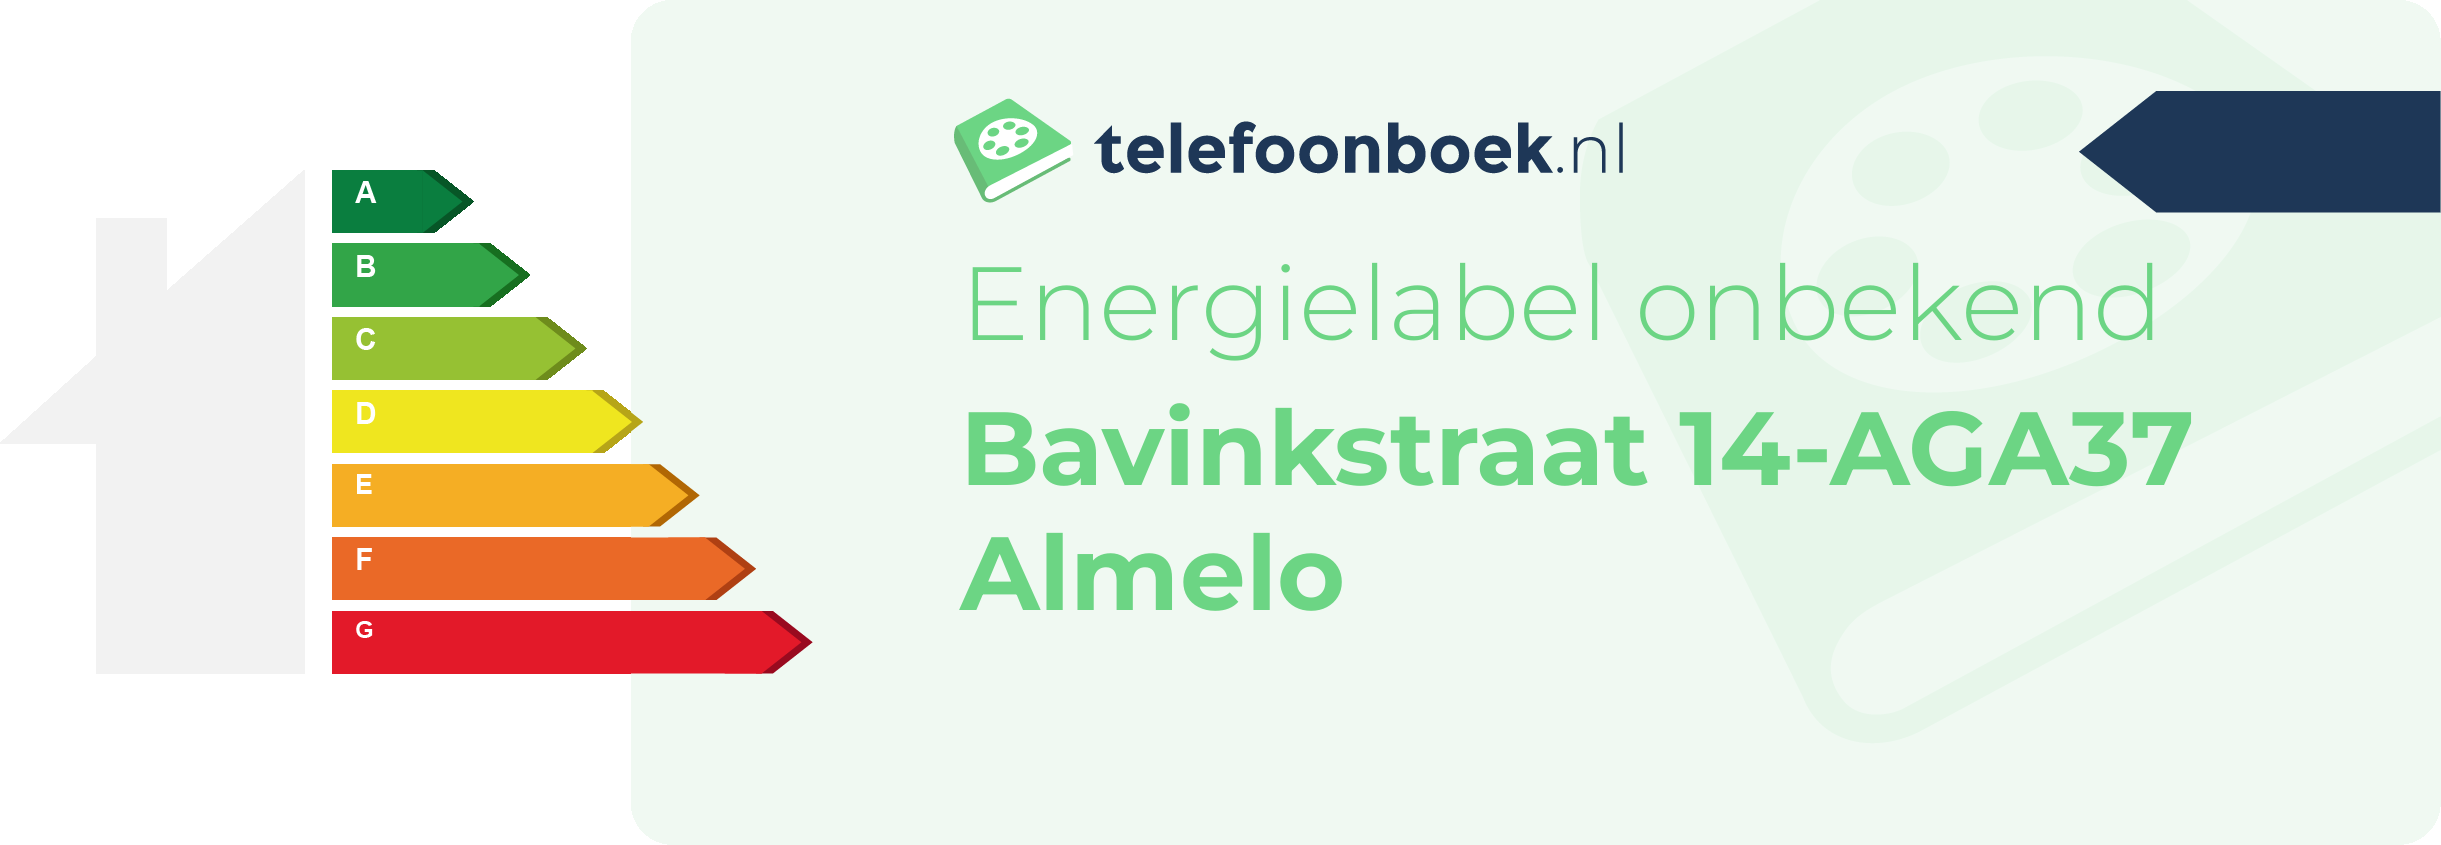 Energielabel Bavinkstraat 14-AGA37 Almelo